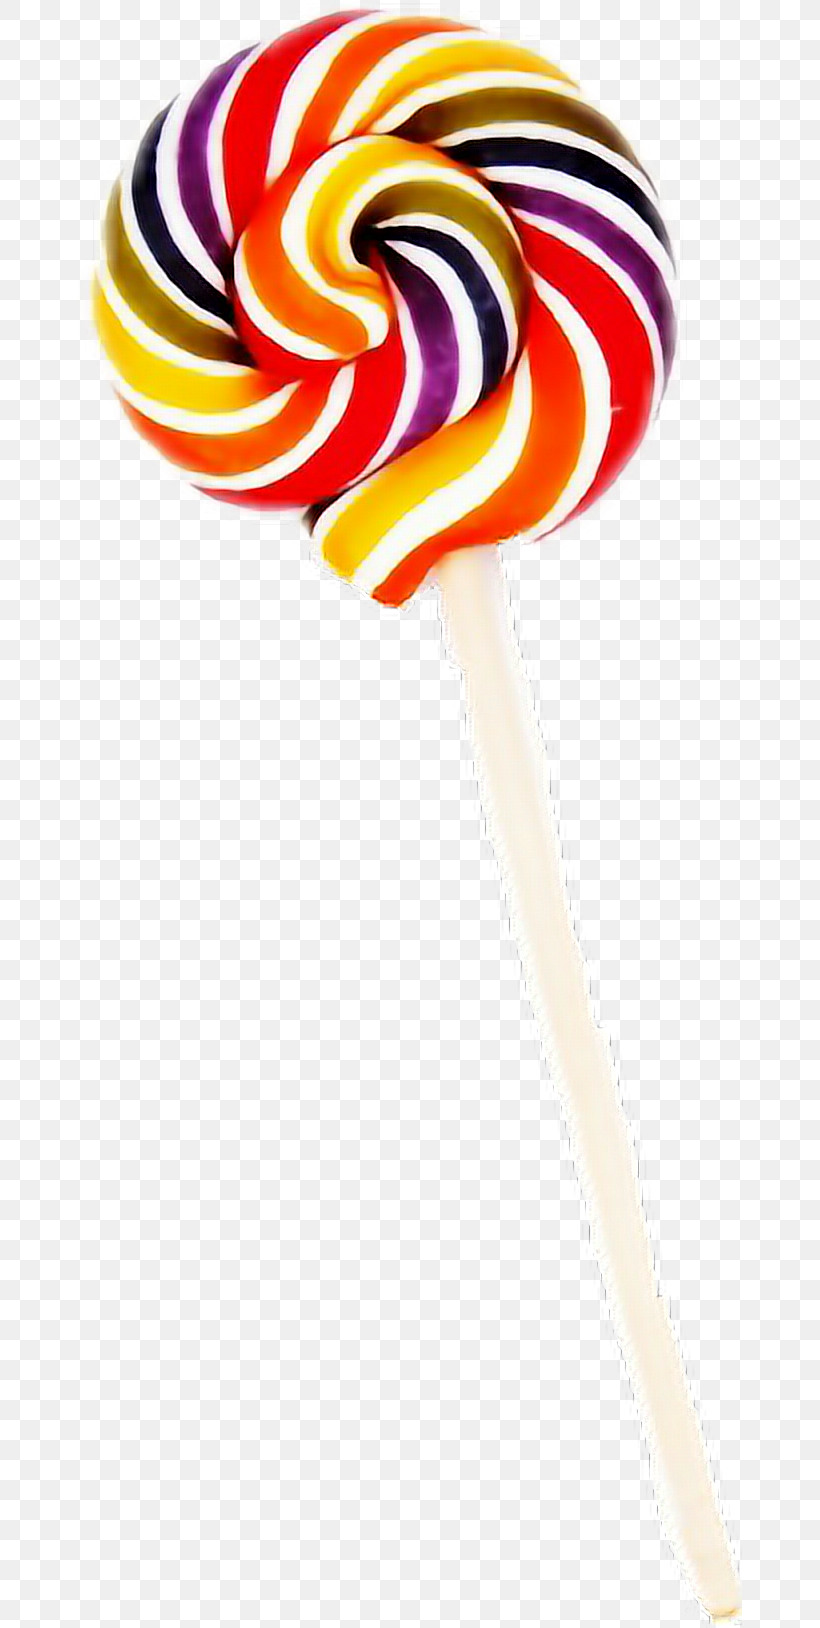 Lollipop Bigbang Line Lollipop, PNG, 664x1628px, Lollipop, Bigbang, Line Download Free